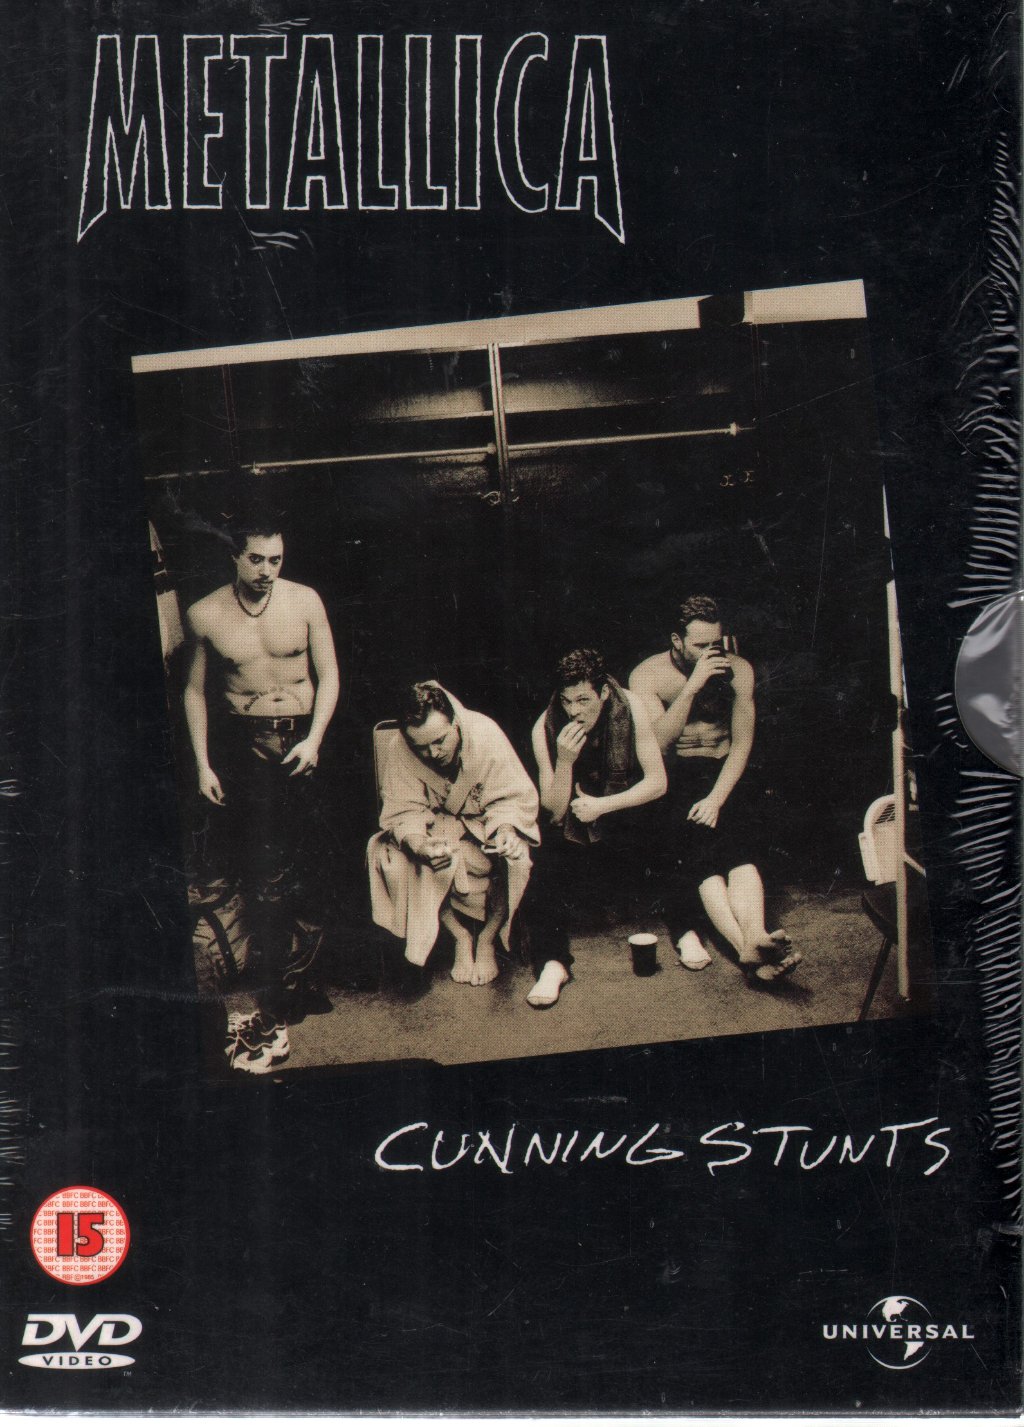 Cunning stunts - Metallica (アルバム)